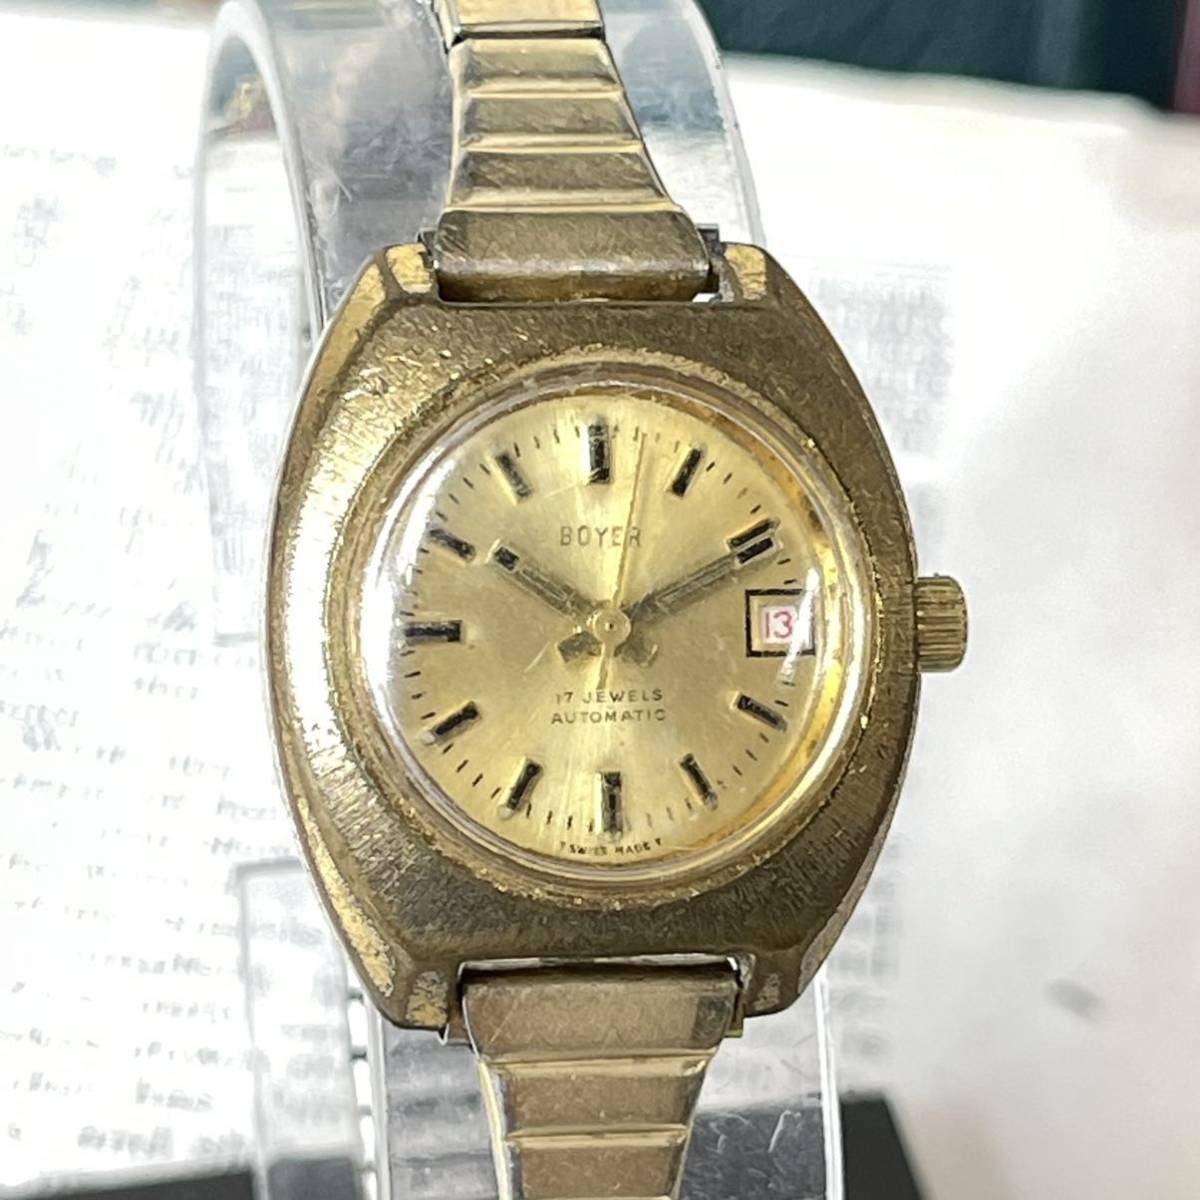 BOYER ボイヤー 腕時計 機械式 自動巻 17石 AUTOMATIC デイト ゴールドカラー SWISS MADE スイス レディース ビンテージ 稼動品 W1836_画像1